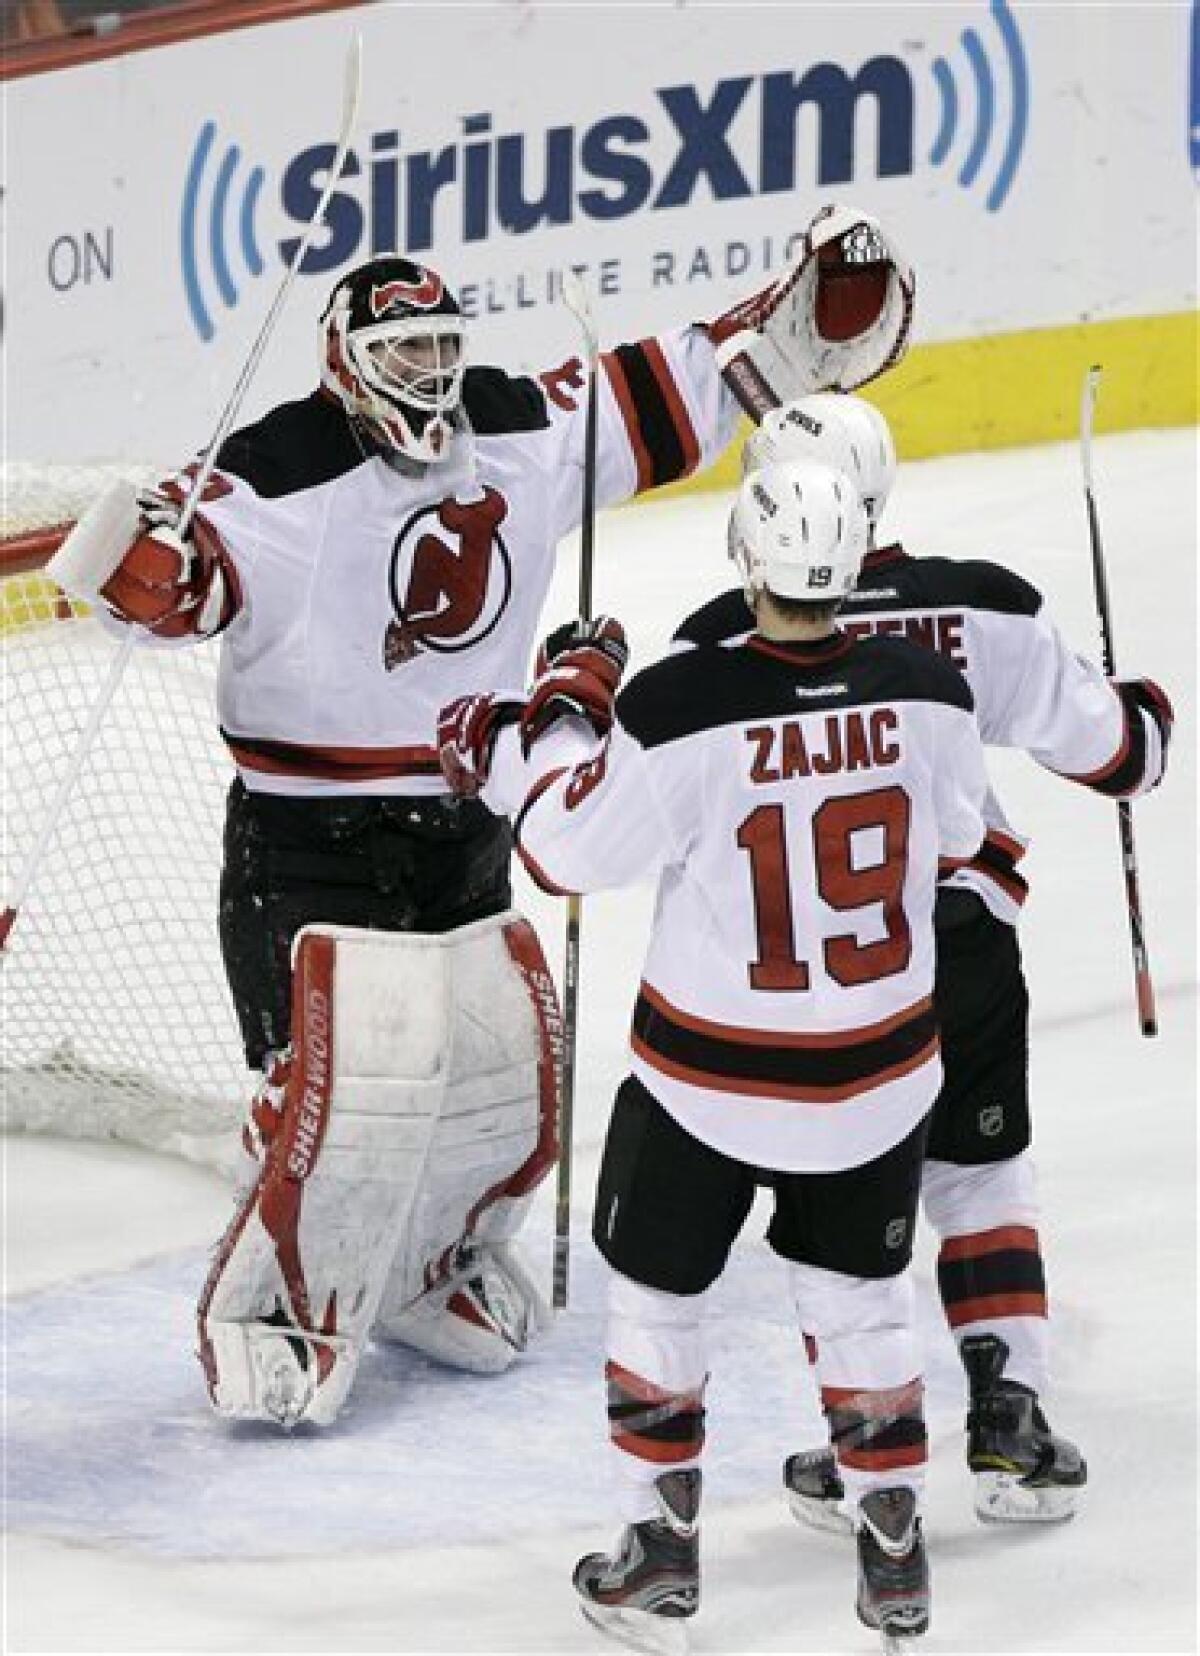 Travis Zajac, David Clarkson each score as New Jersey Devils top